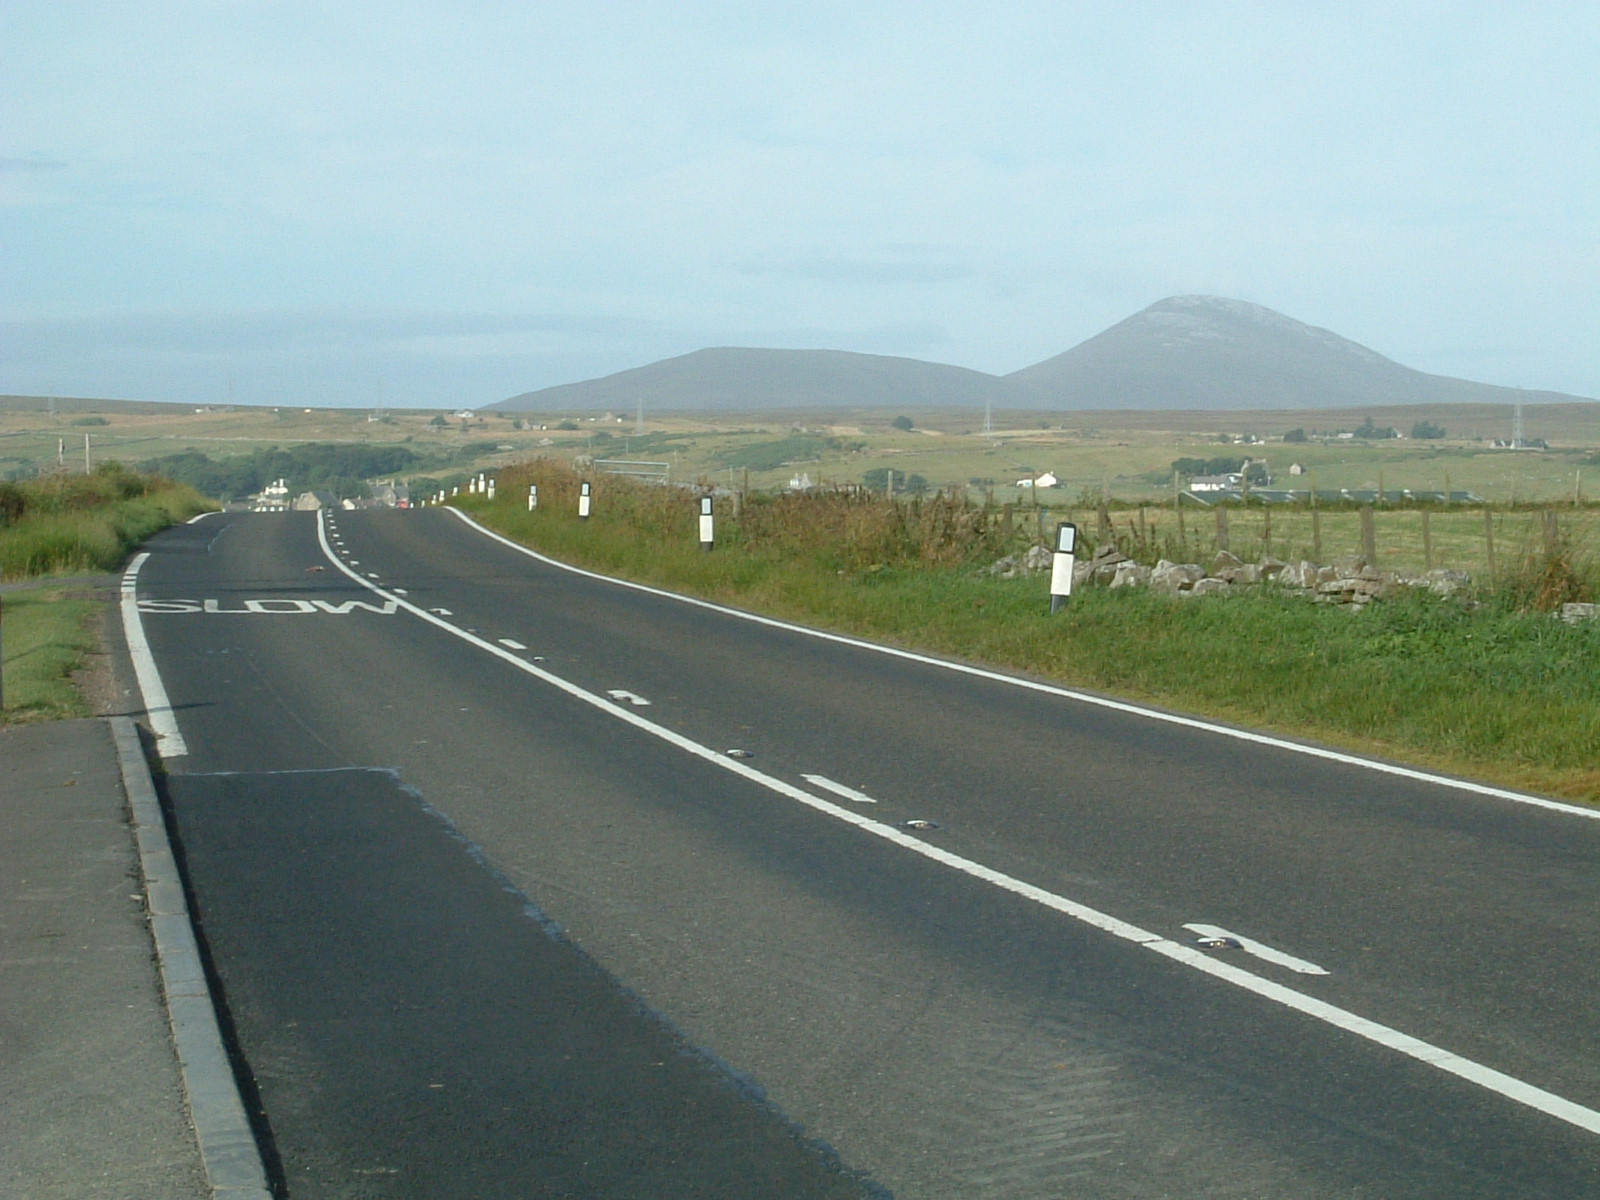 Looking south towards Dunbeath